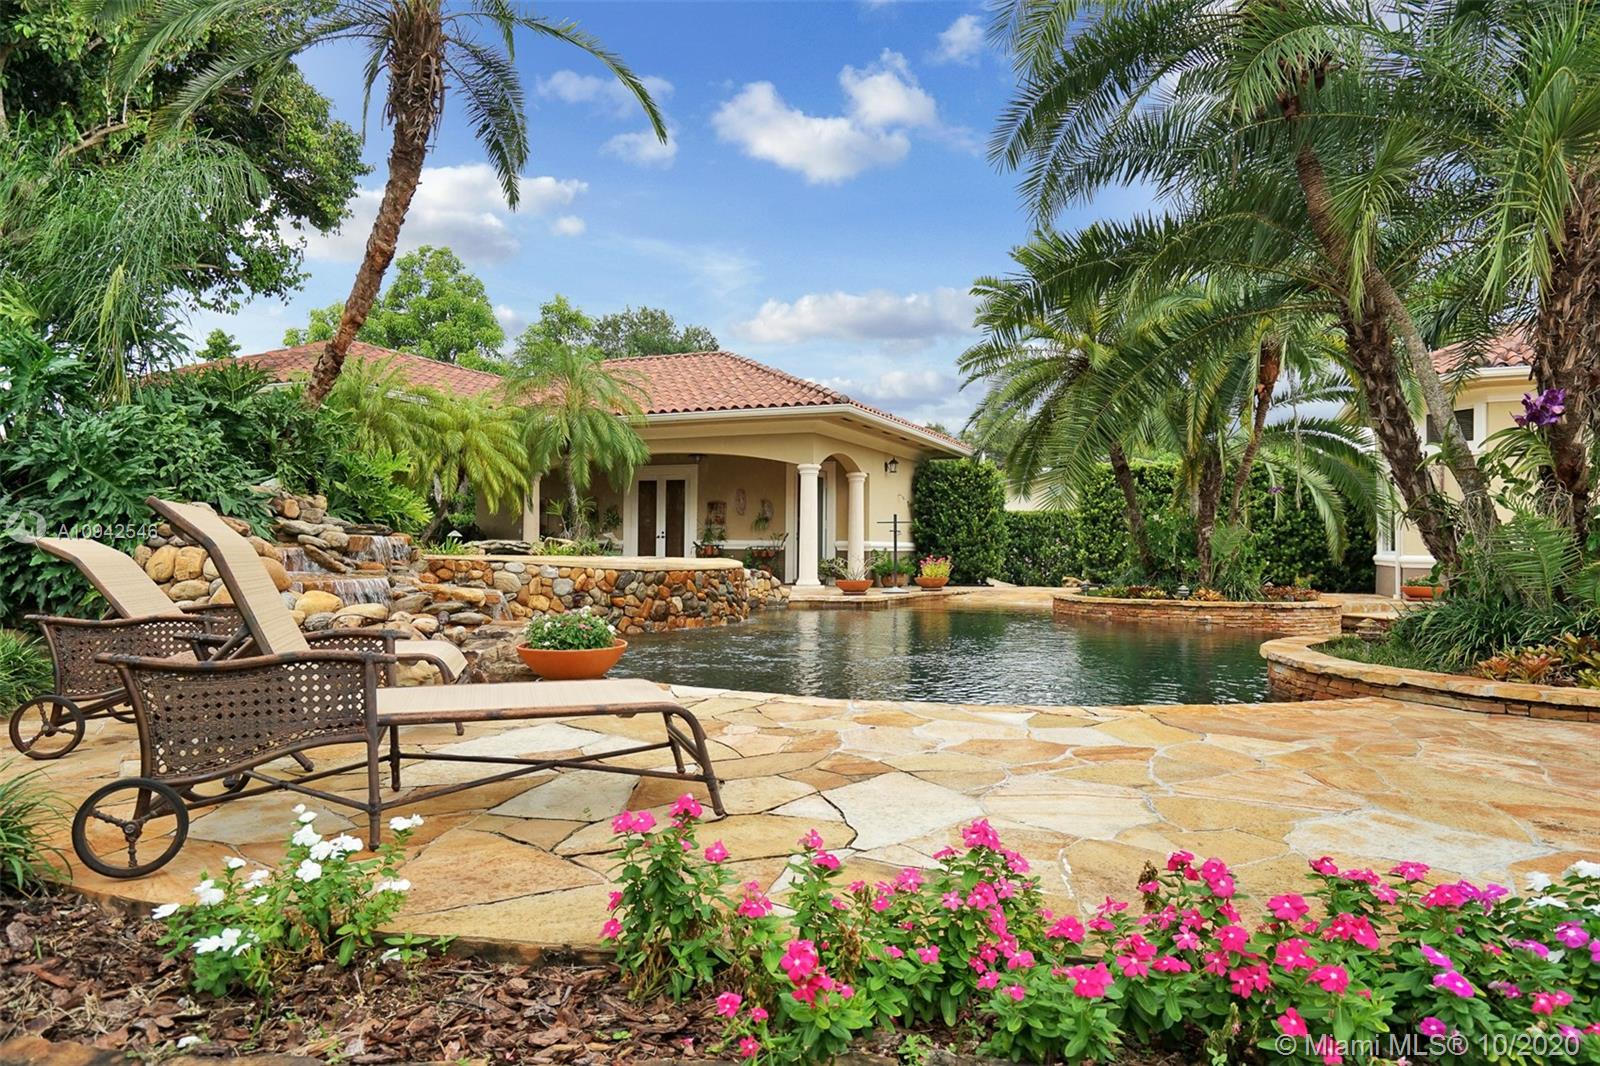 Beautiful backyard with heated Jacuzzi whirlpool, glorious pool